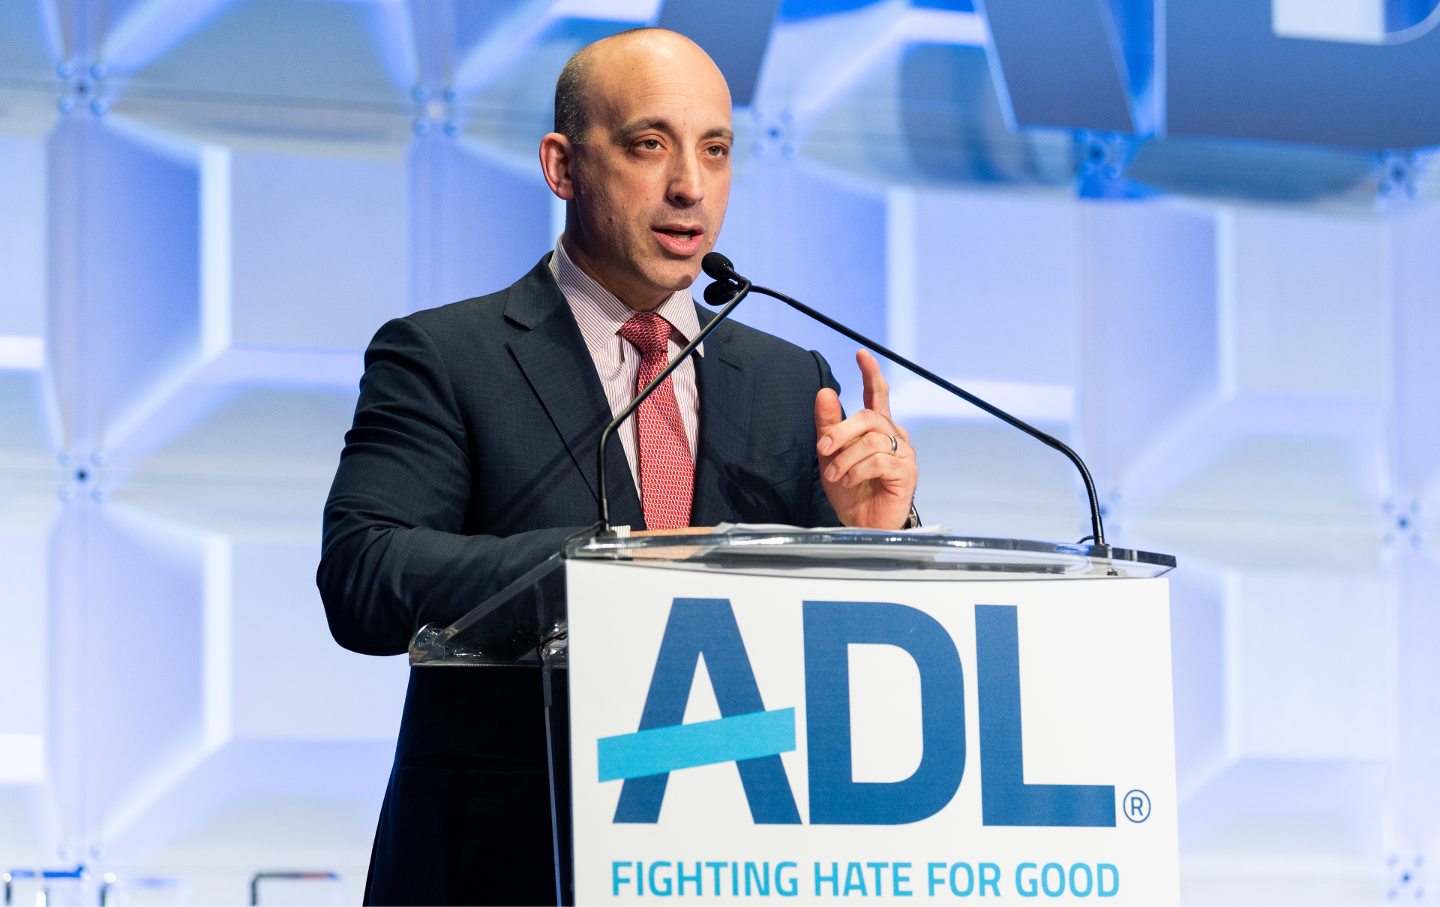 Jonathan Greenblatt, ADL CEO and national director, speaking at the Anti-Defamation League National Leadership Summit in Washington, D.C.